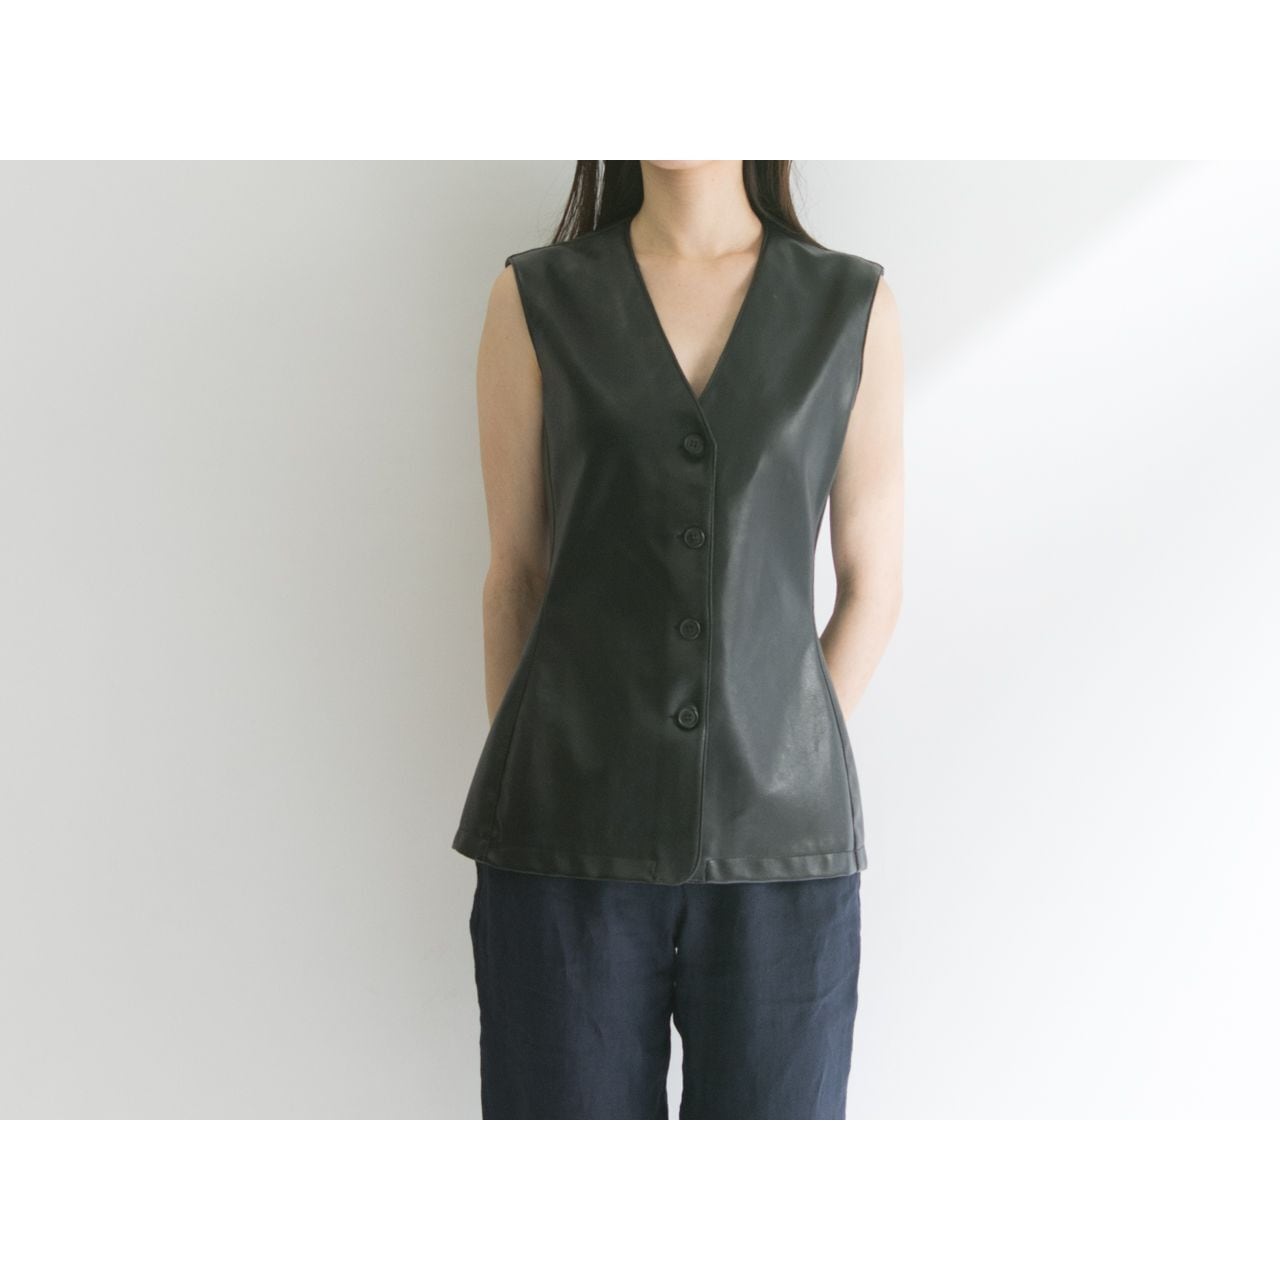 【A.P.C.】Made in France eco leather sleeveless top vest（アーペーセー フランス製エコレザーノースリーブトップ ベスト）5c